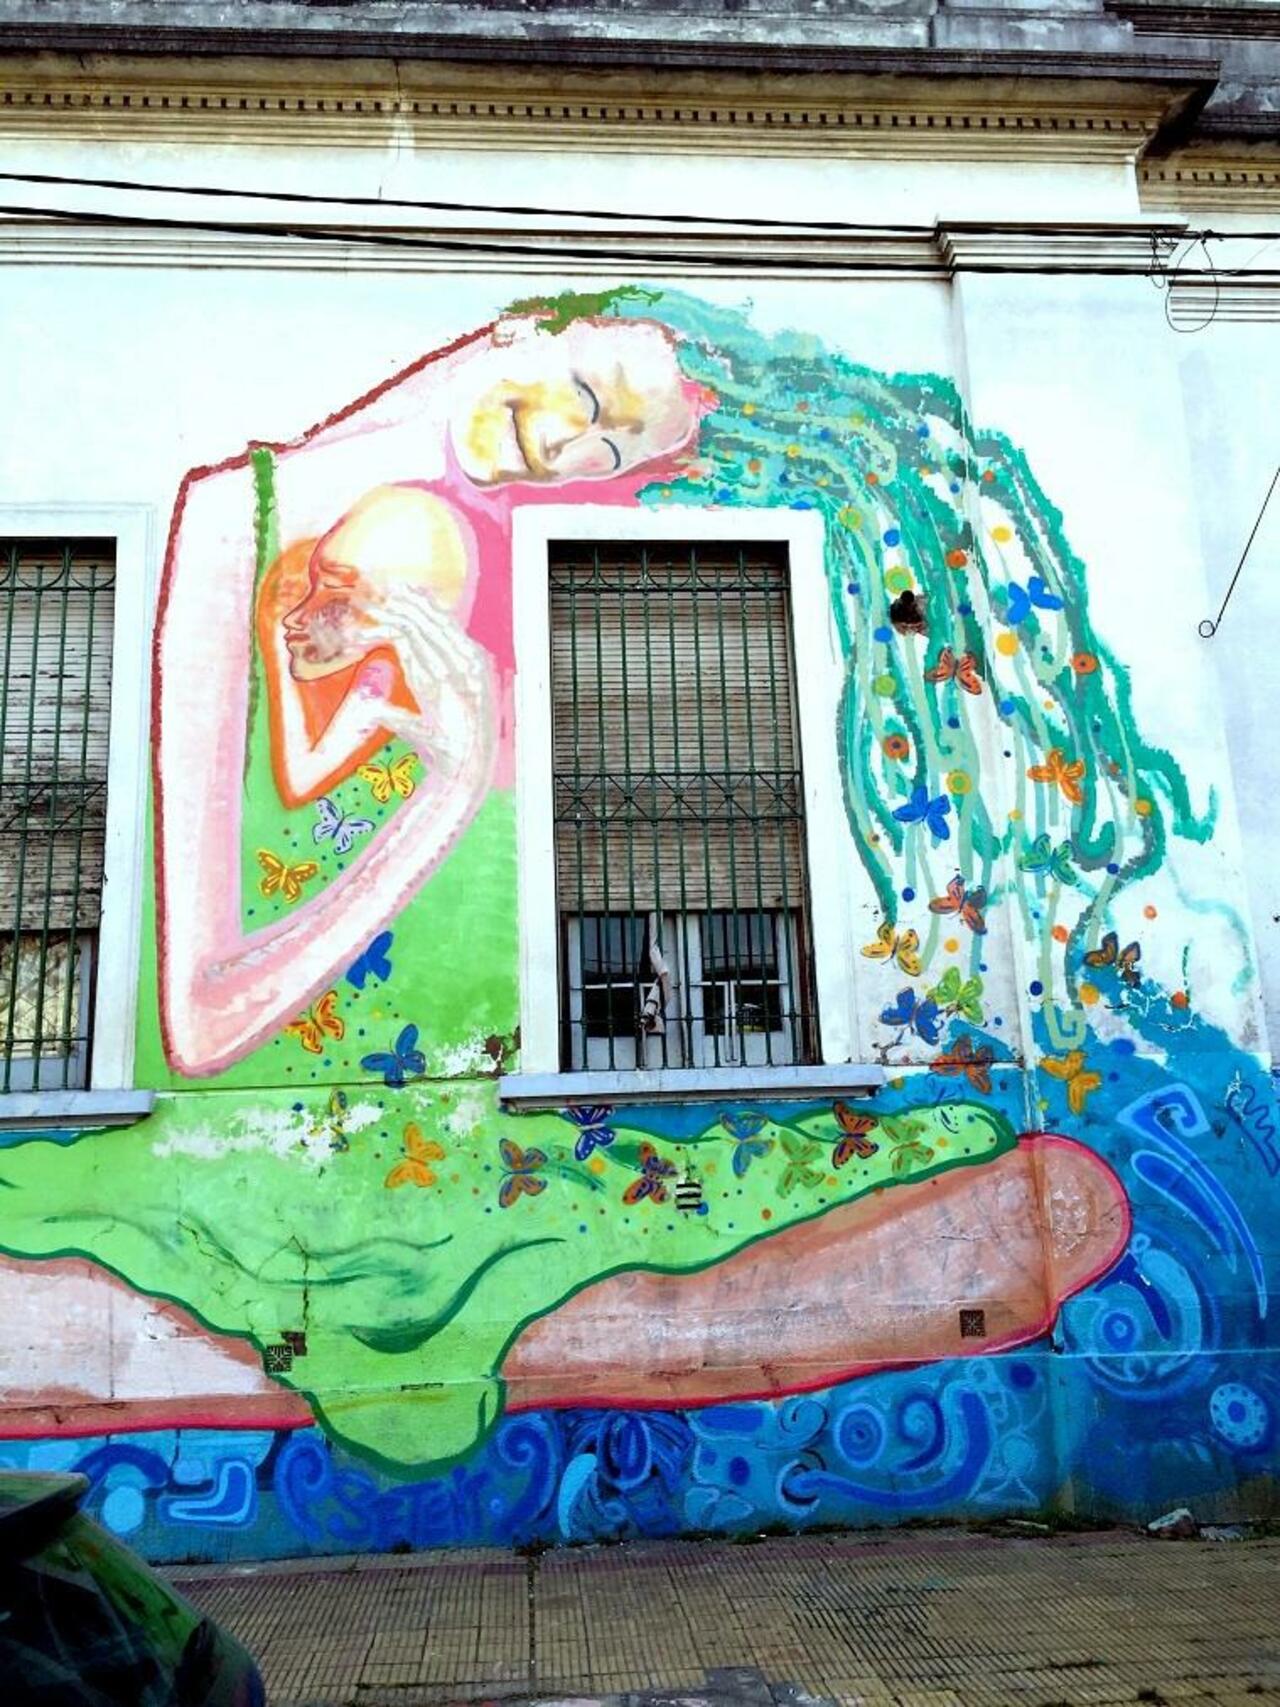 #Graffiti de hoy: << Amor de madre >> calles 66, 8y9 #LaPlata #Argentina #StreetArt #UrbanArt #ArteUrbano https://t.co/peLmAXuQTk